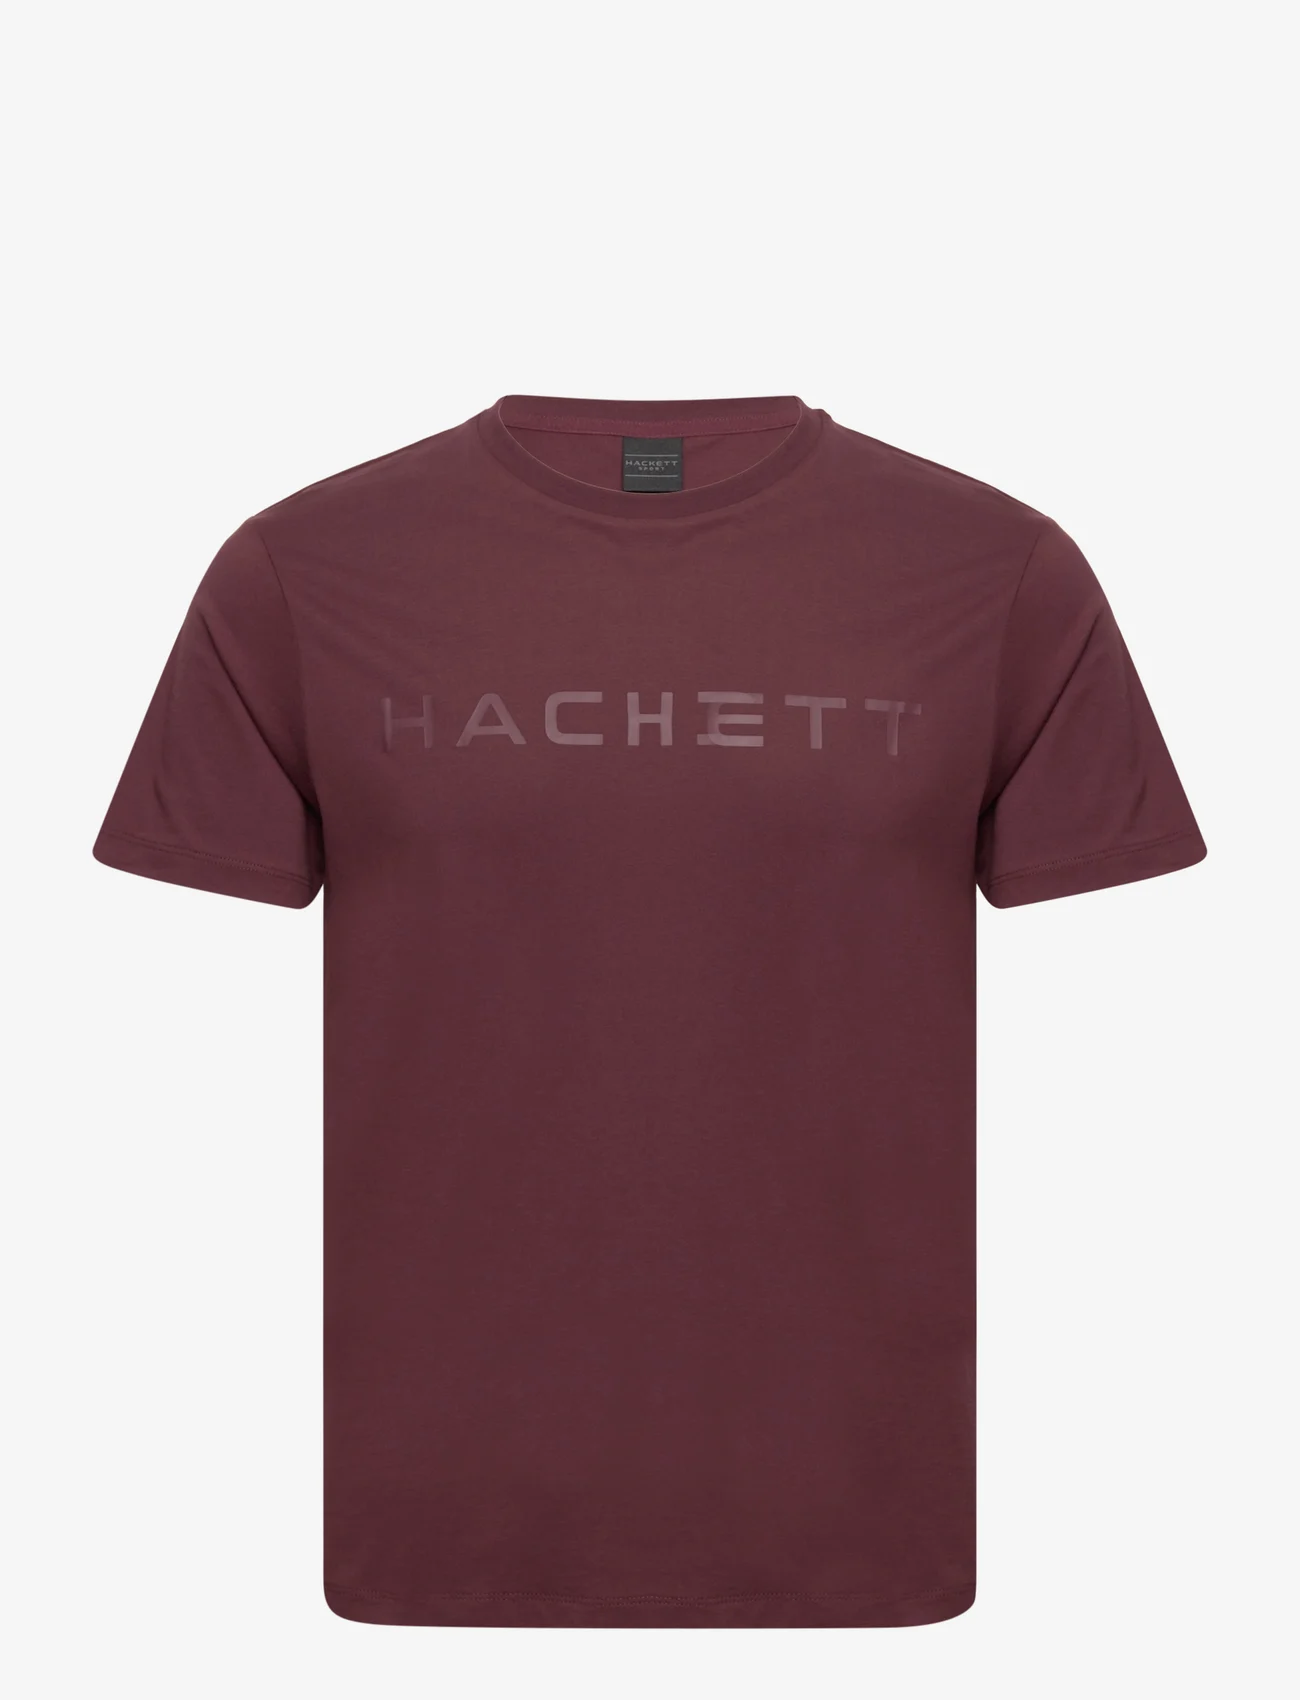 Hackett London - ESSENTIAL TEE - basic t-shirts - maroon red - 0